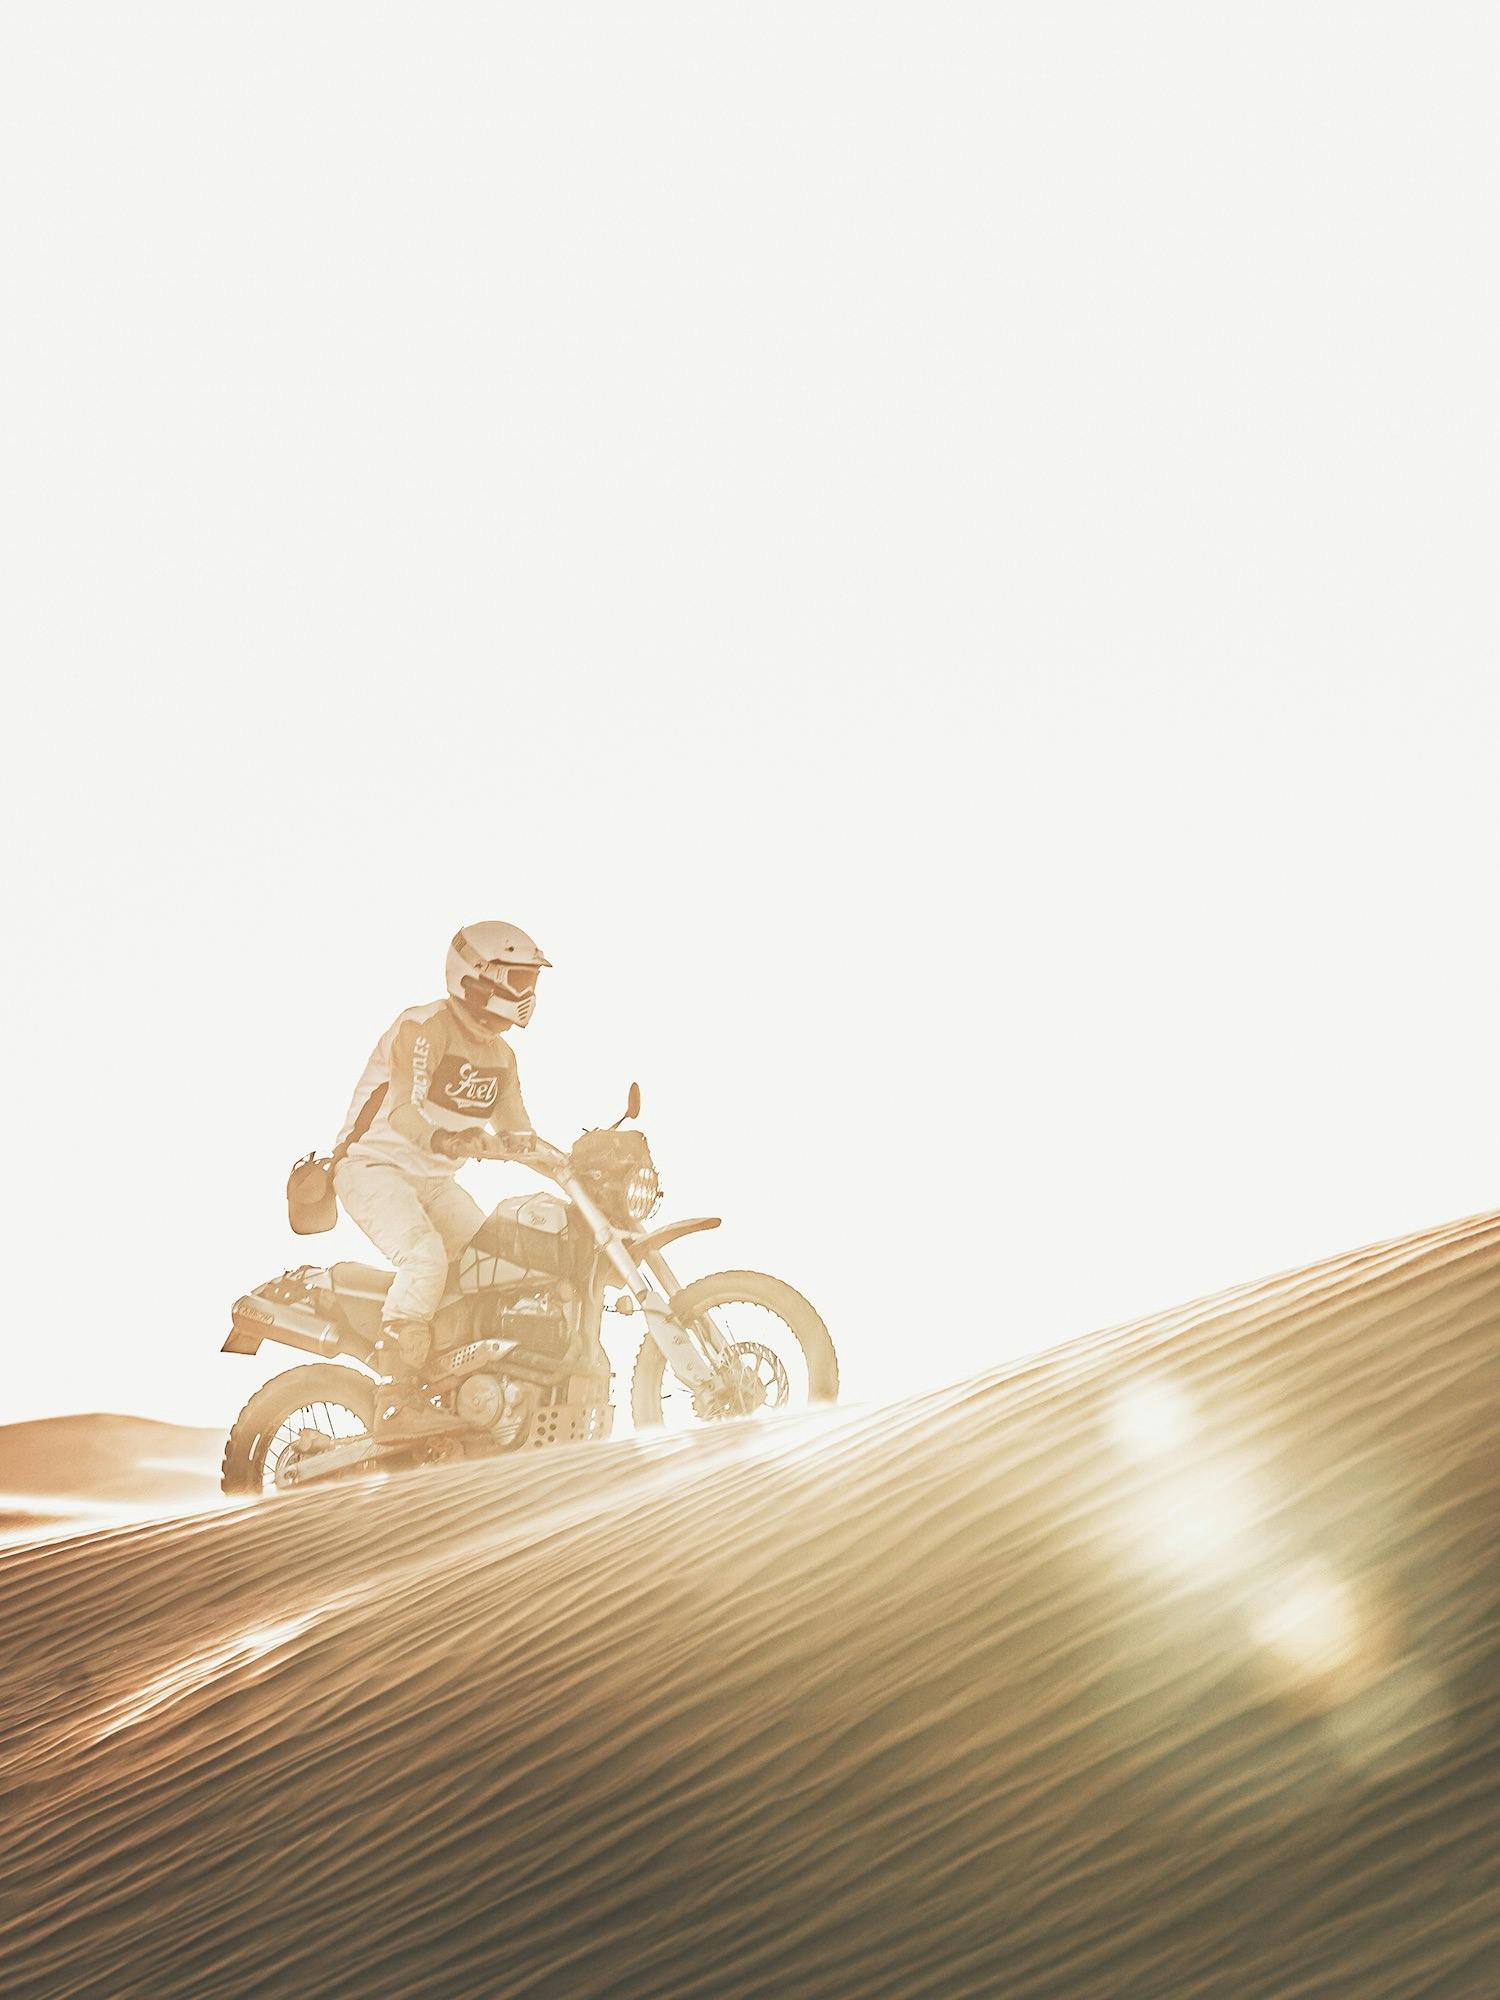 Riding Dunes in the Sahara